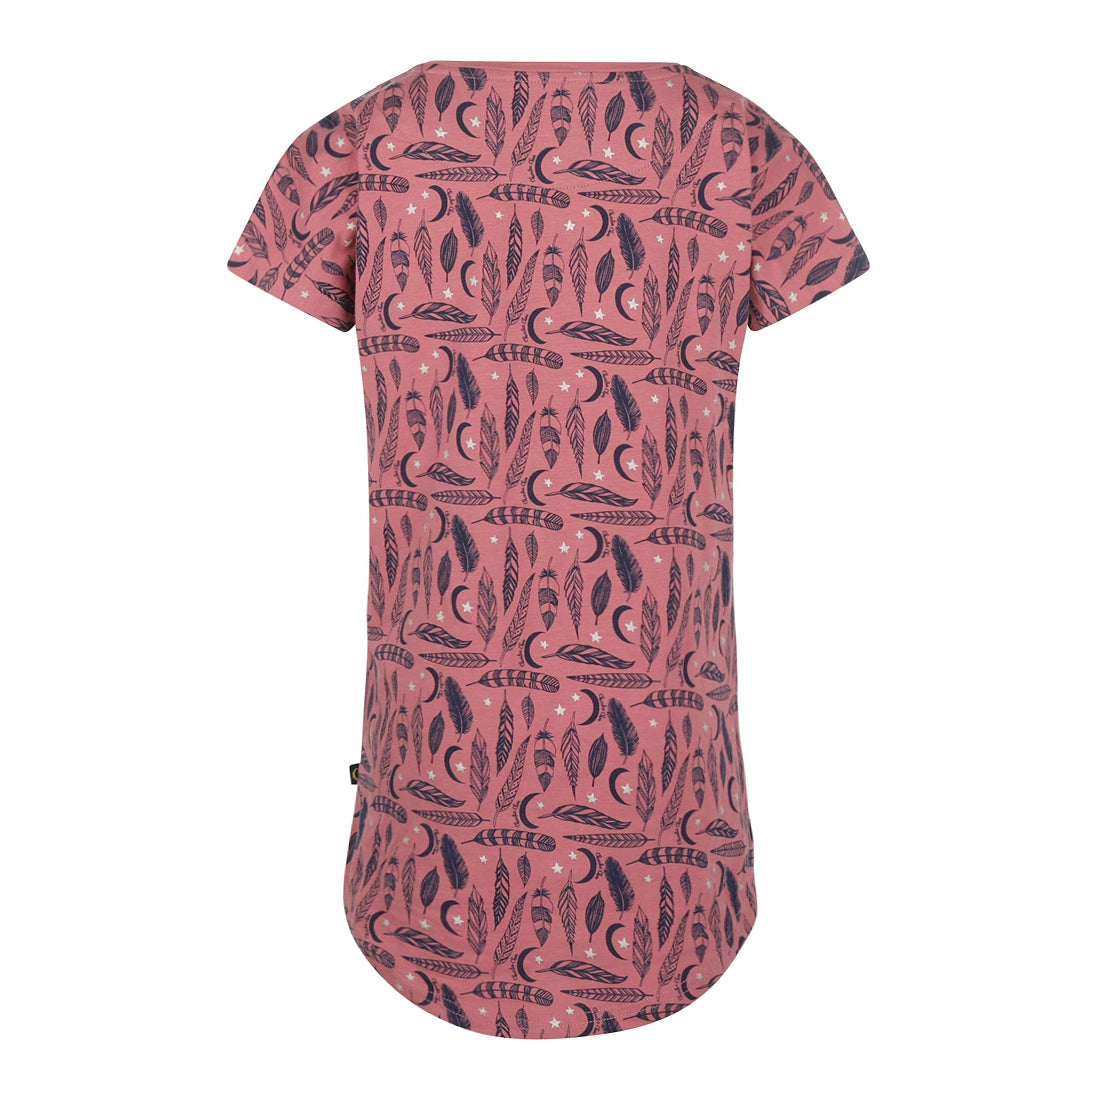 Girls big shirt ss T47020-41 78 Rouge pink